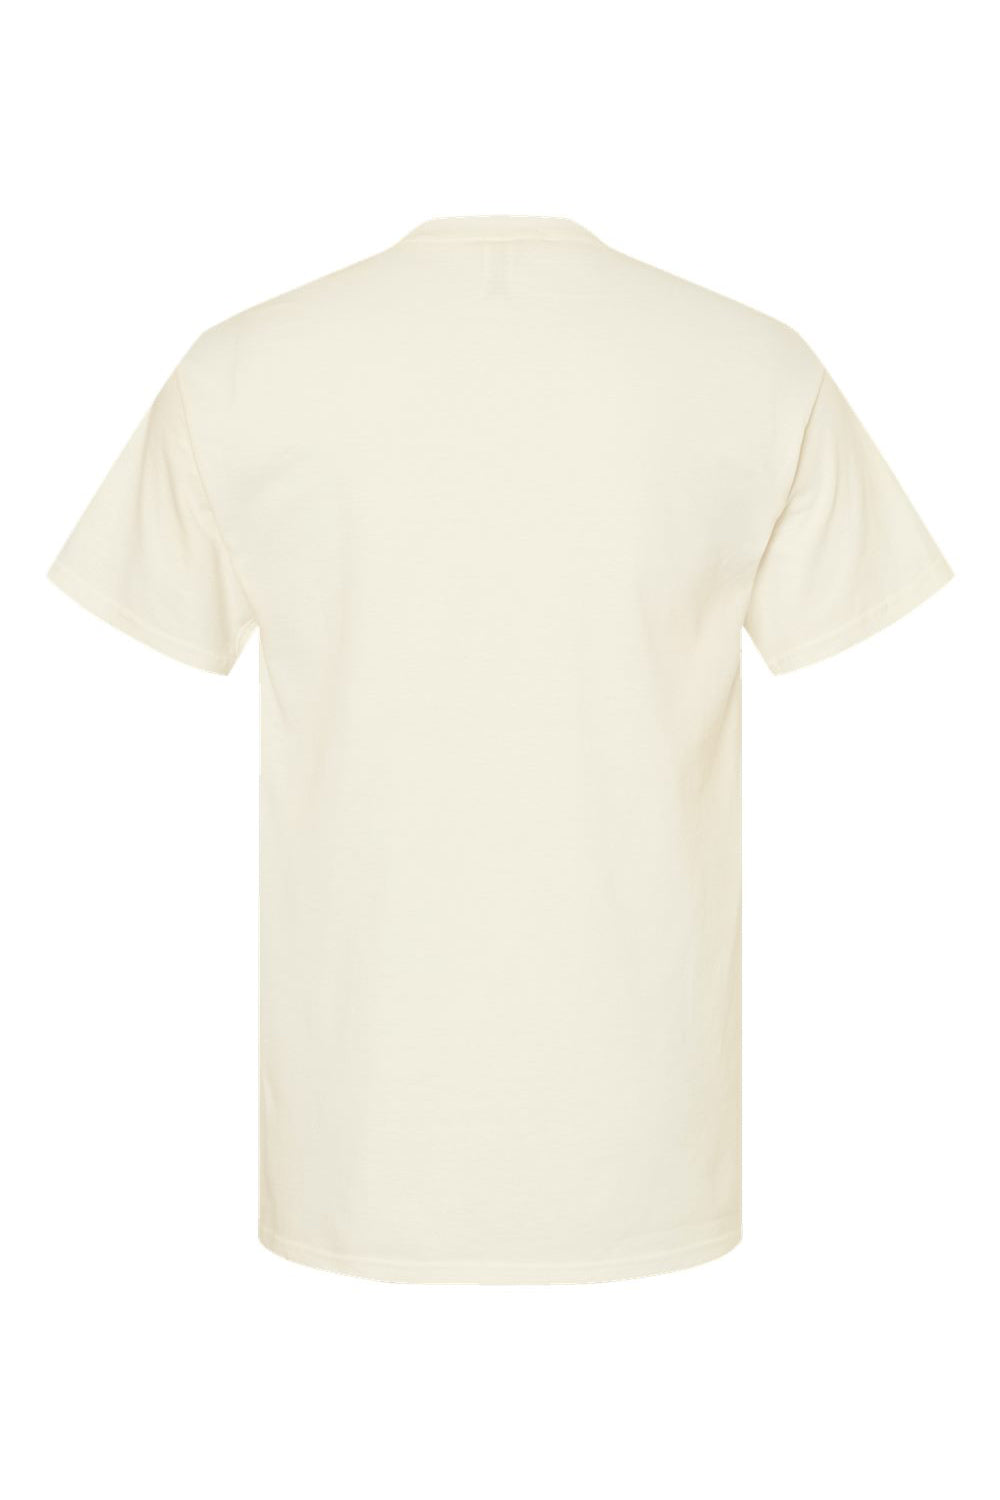 M&O 4800 Mens Gold Soft Touch Short Sleeve Crewneck T-Shirt Natural Flat Back